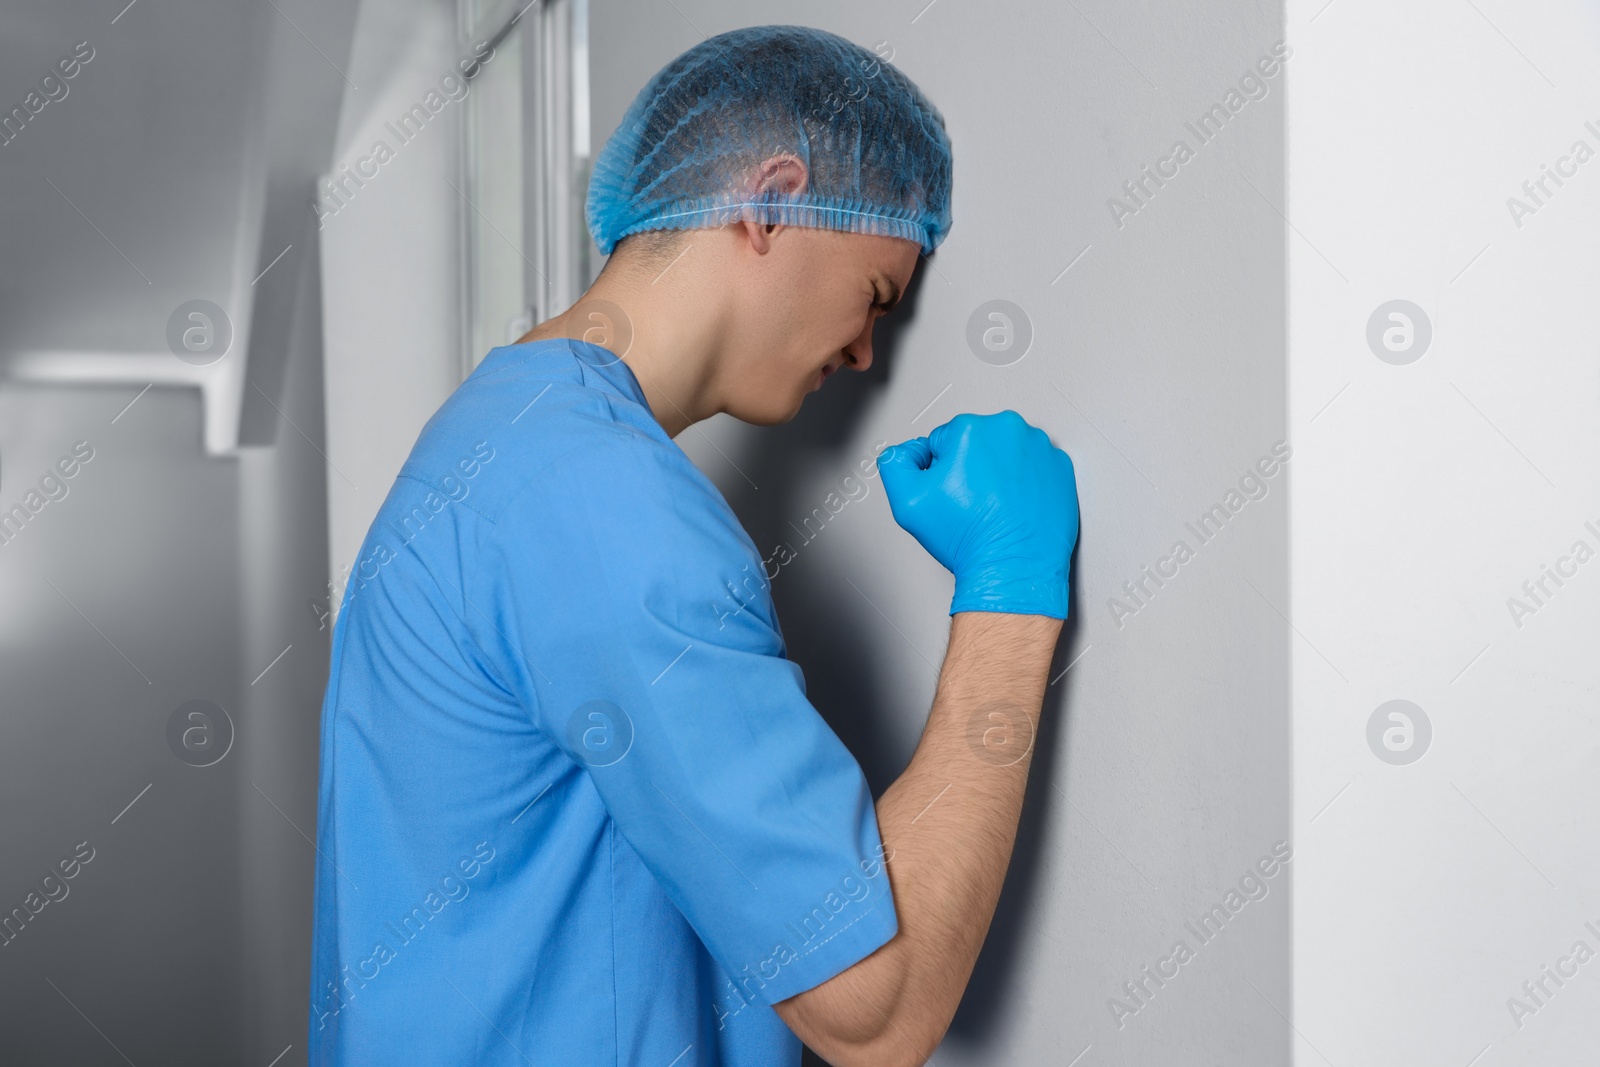 Photo of Stressed doctor near grey wall in hospital hallway